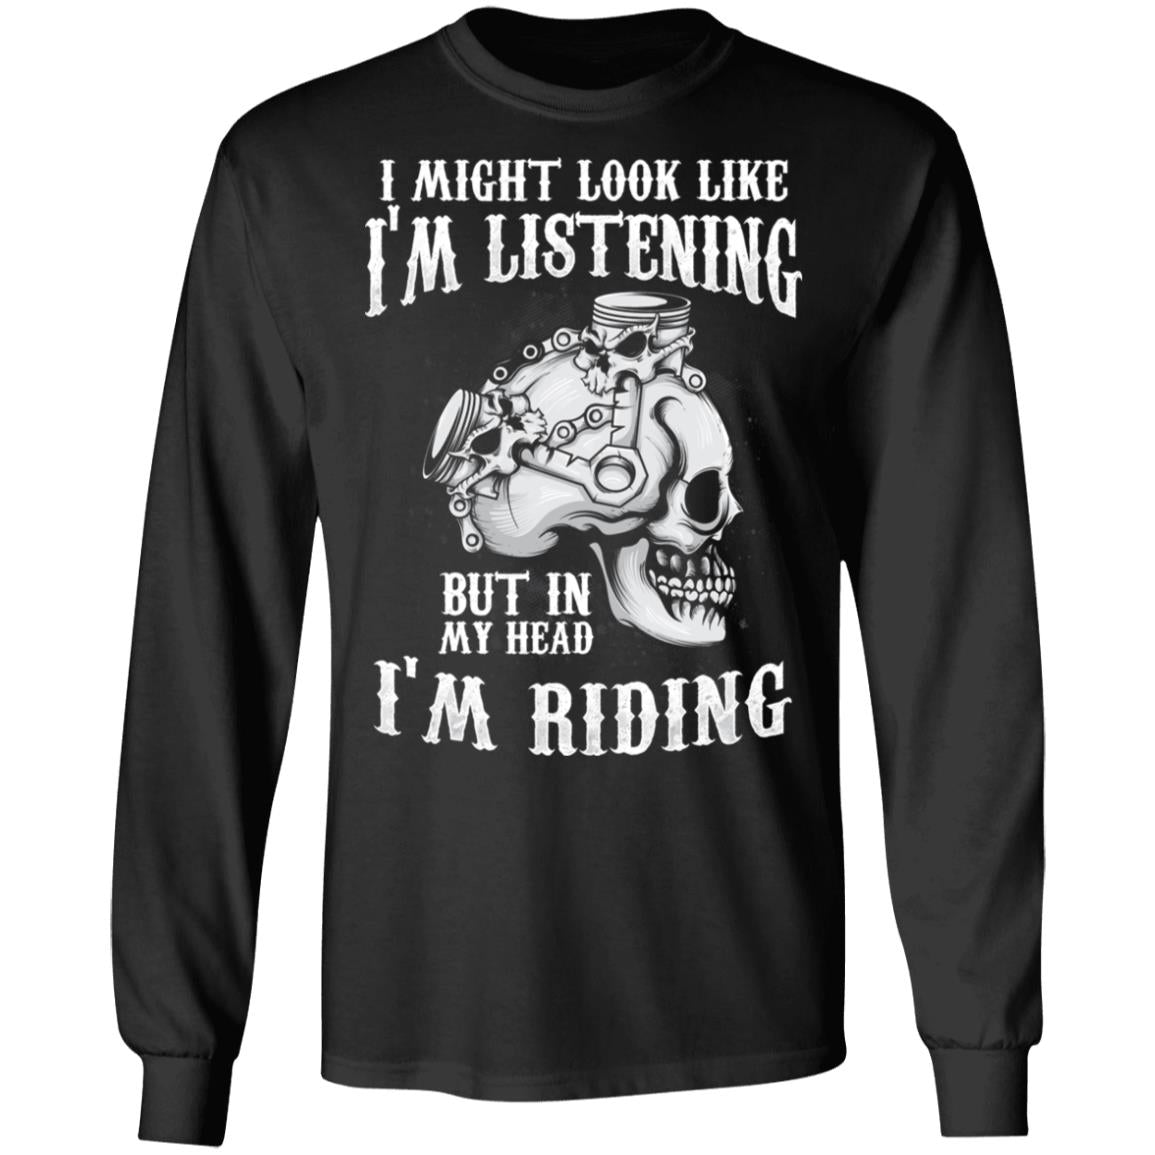 I Might Look Like I'm Listening Motorcycle Shirt